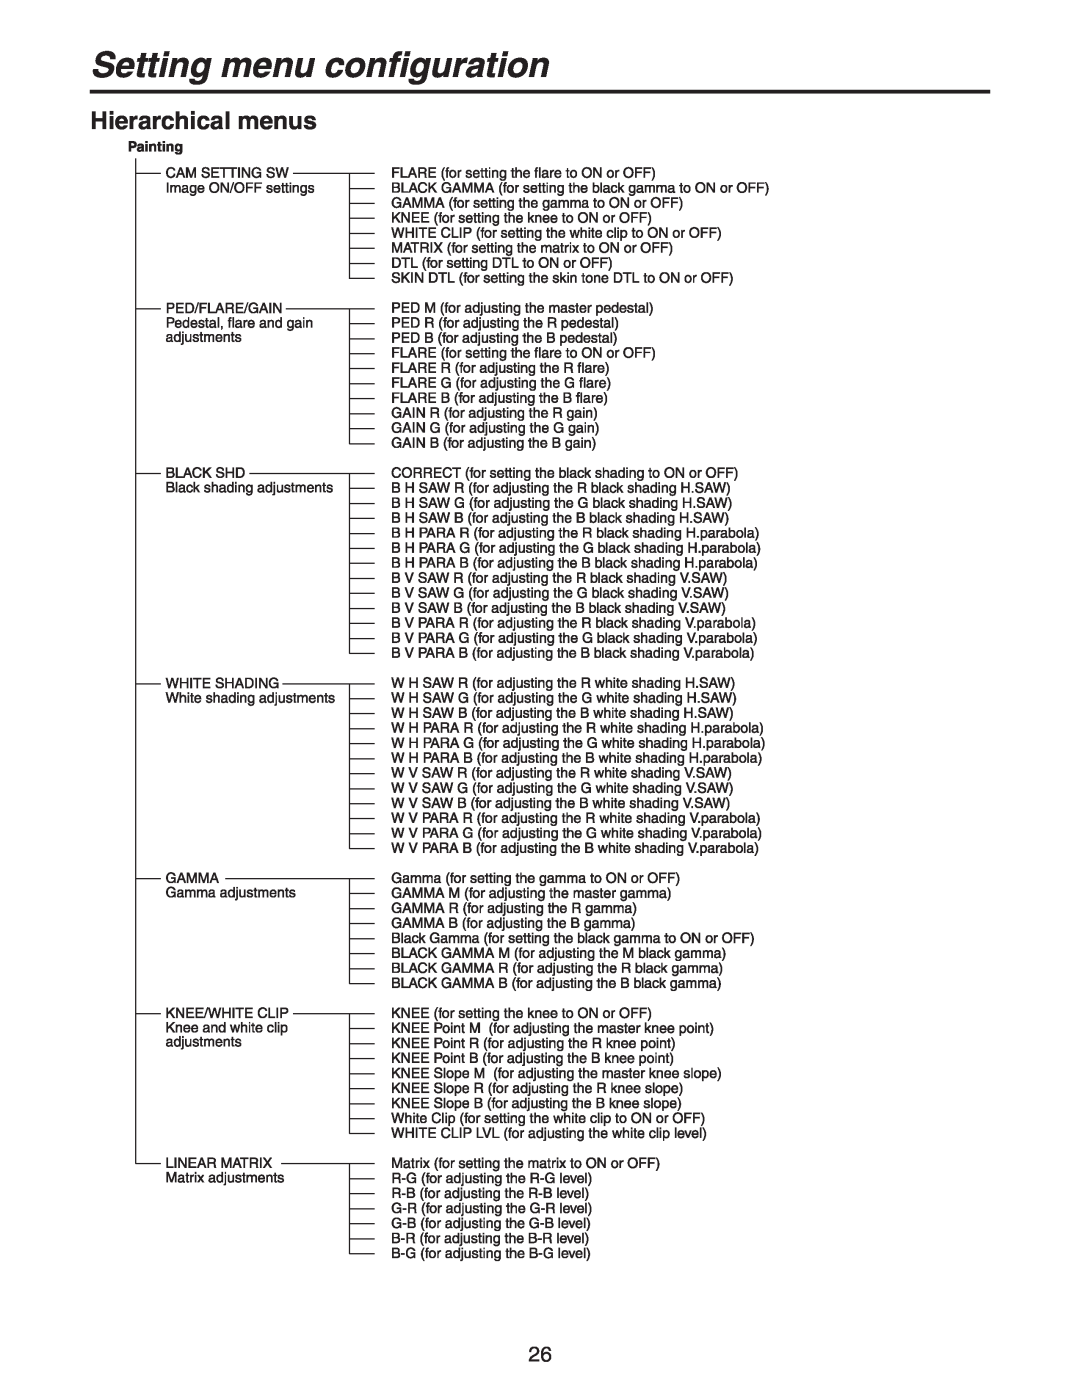 Panasonic AK-HC931BP manual Setting menu configuration, Hierarchical menus 